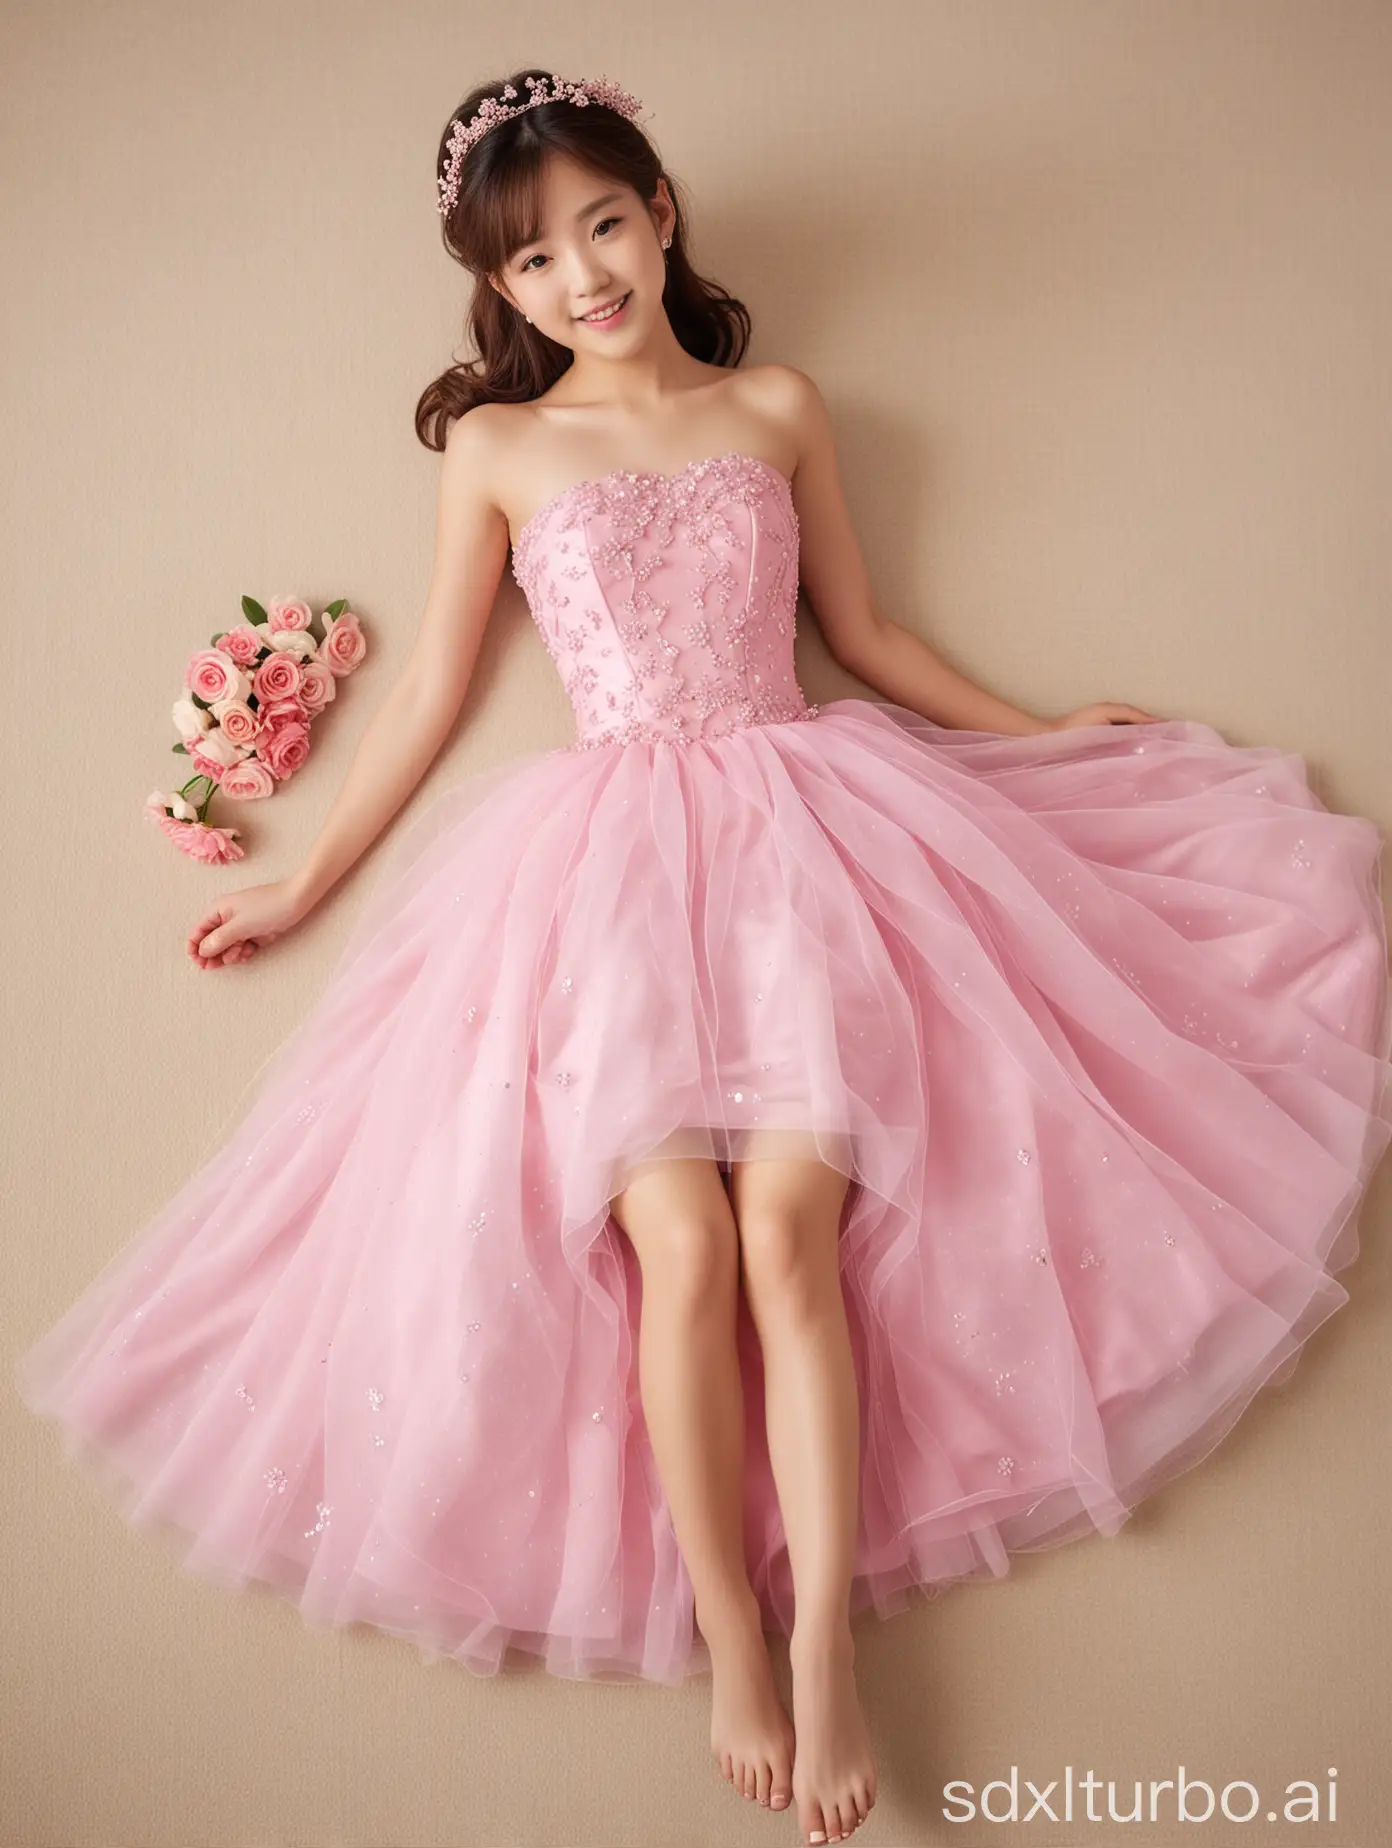 Japanese-12YearOld-Girl-in-Pink-Strapless-Short-Wedding-Dress-Lying-Down